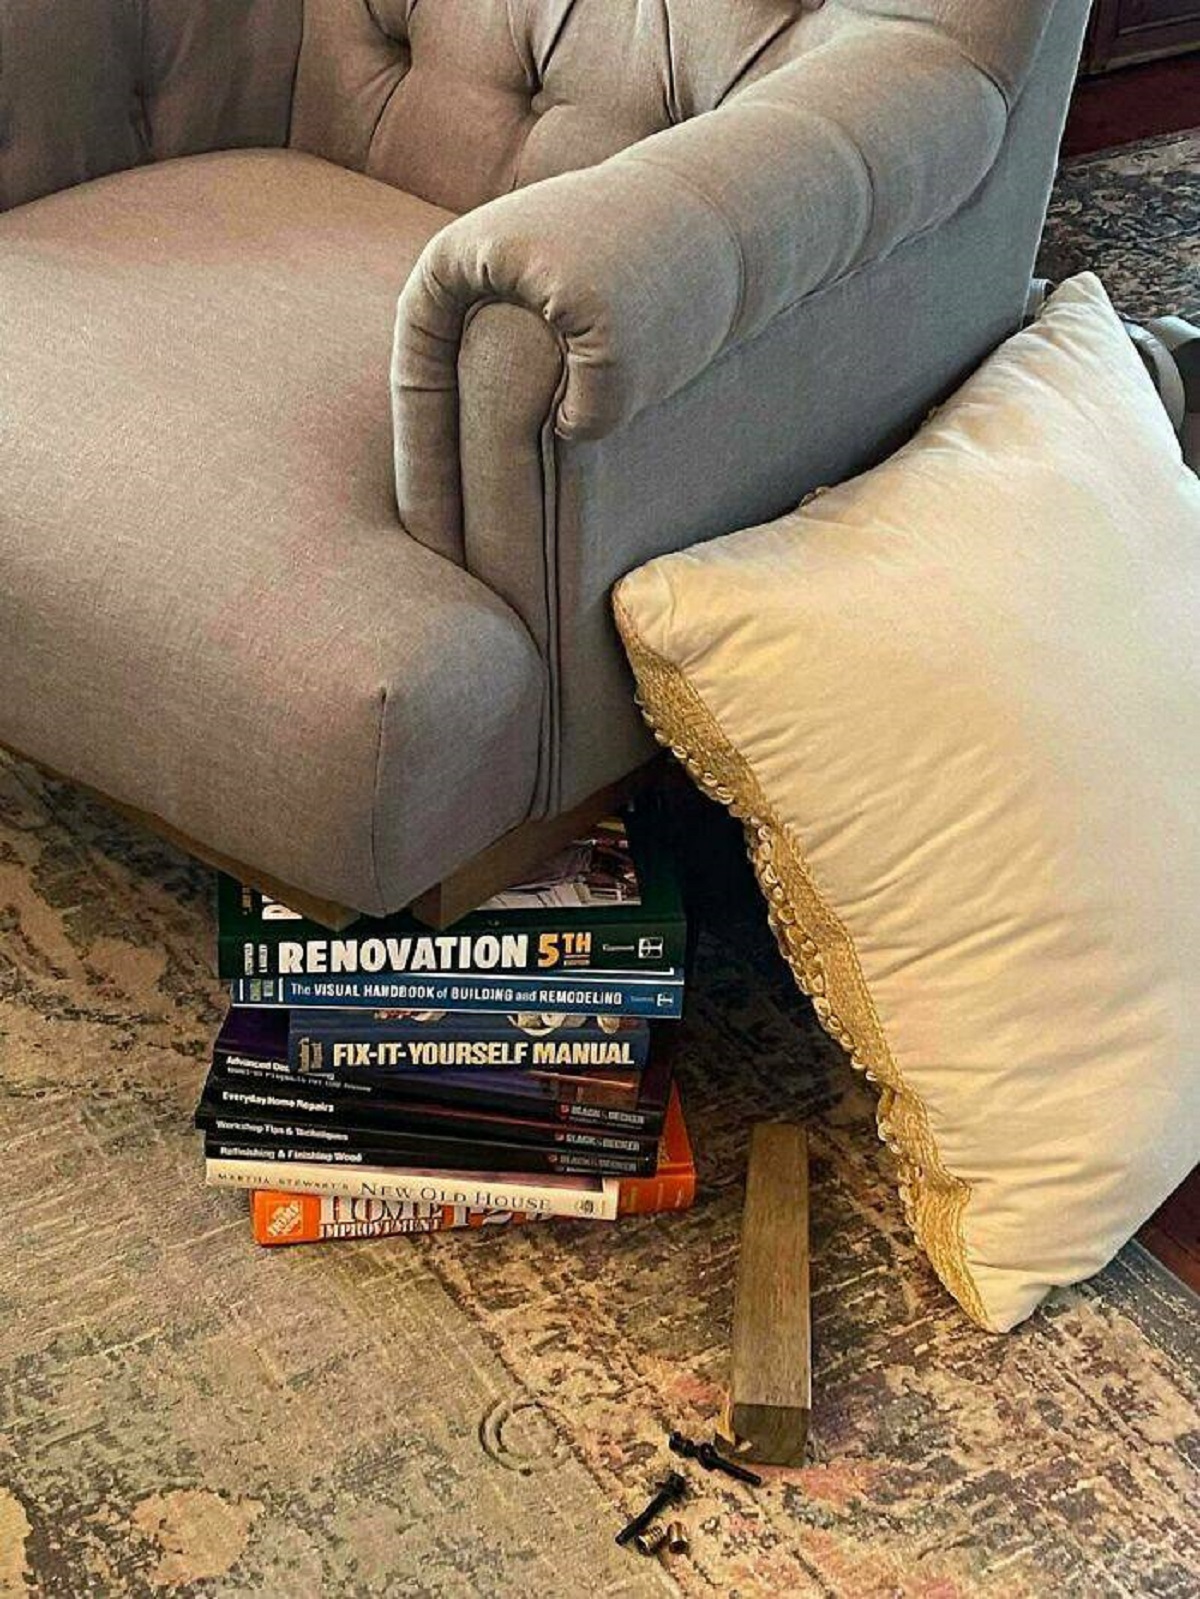 Home improvement - Renovation 5TH FixItYourself Manual